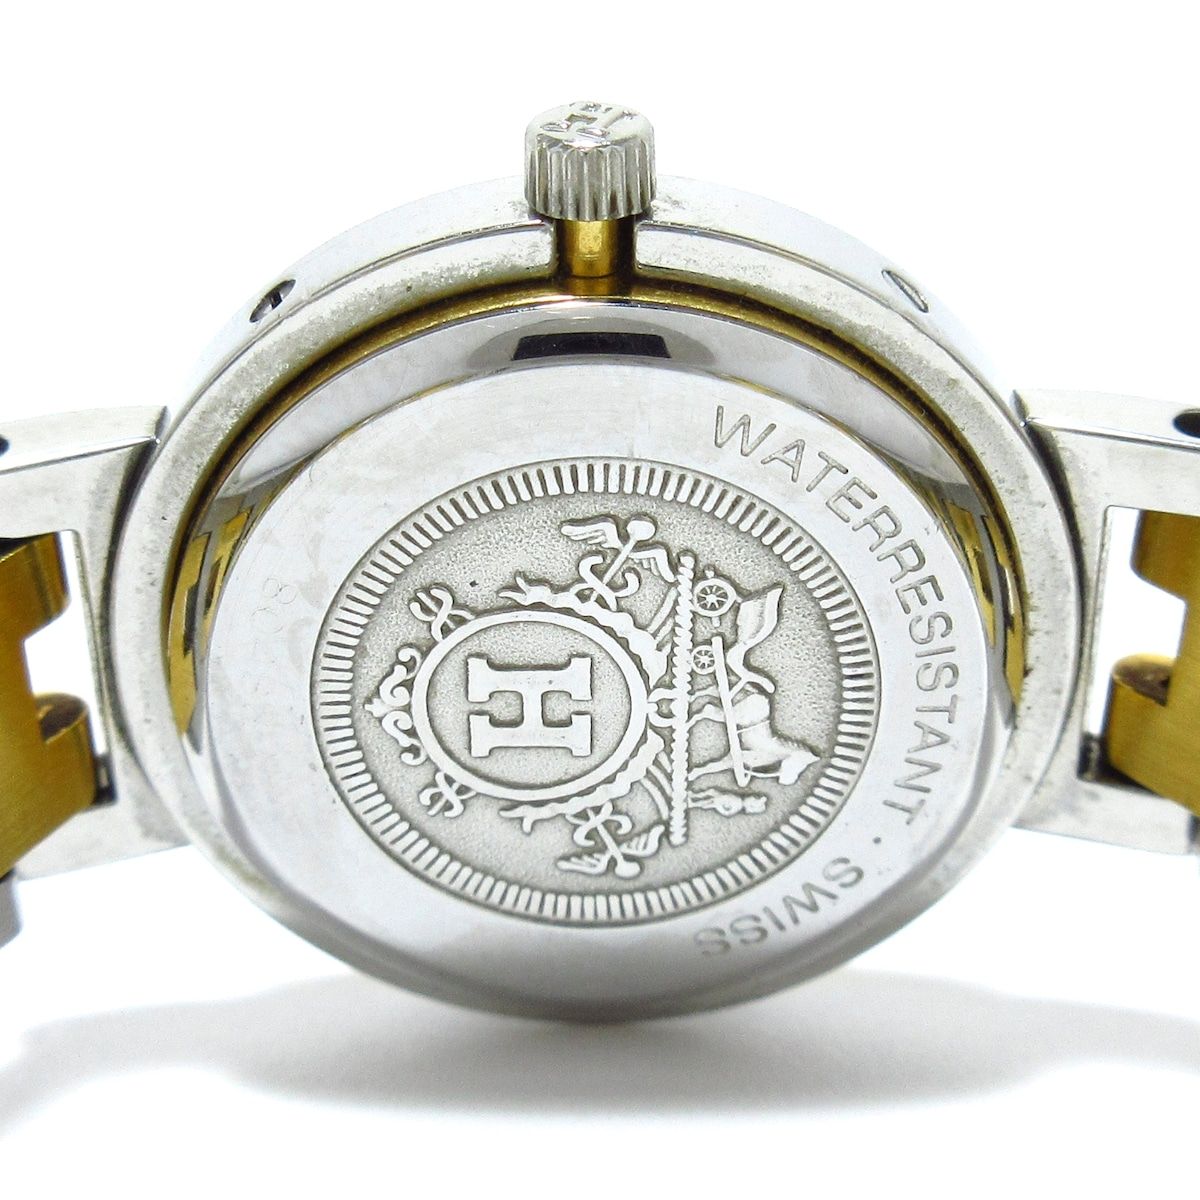 HERMES(エルメス) 腕時計 クリッパー レディース SS 白 - メルカリ